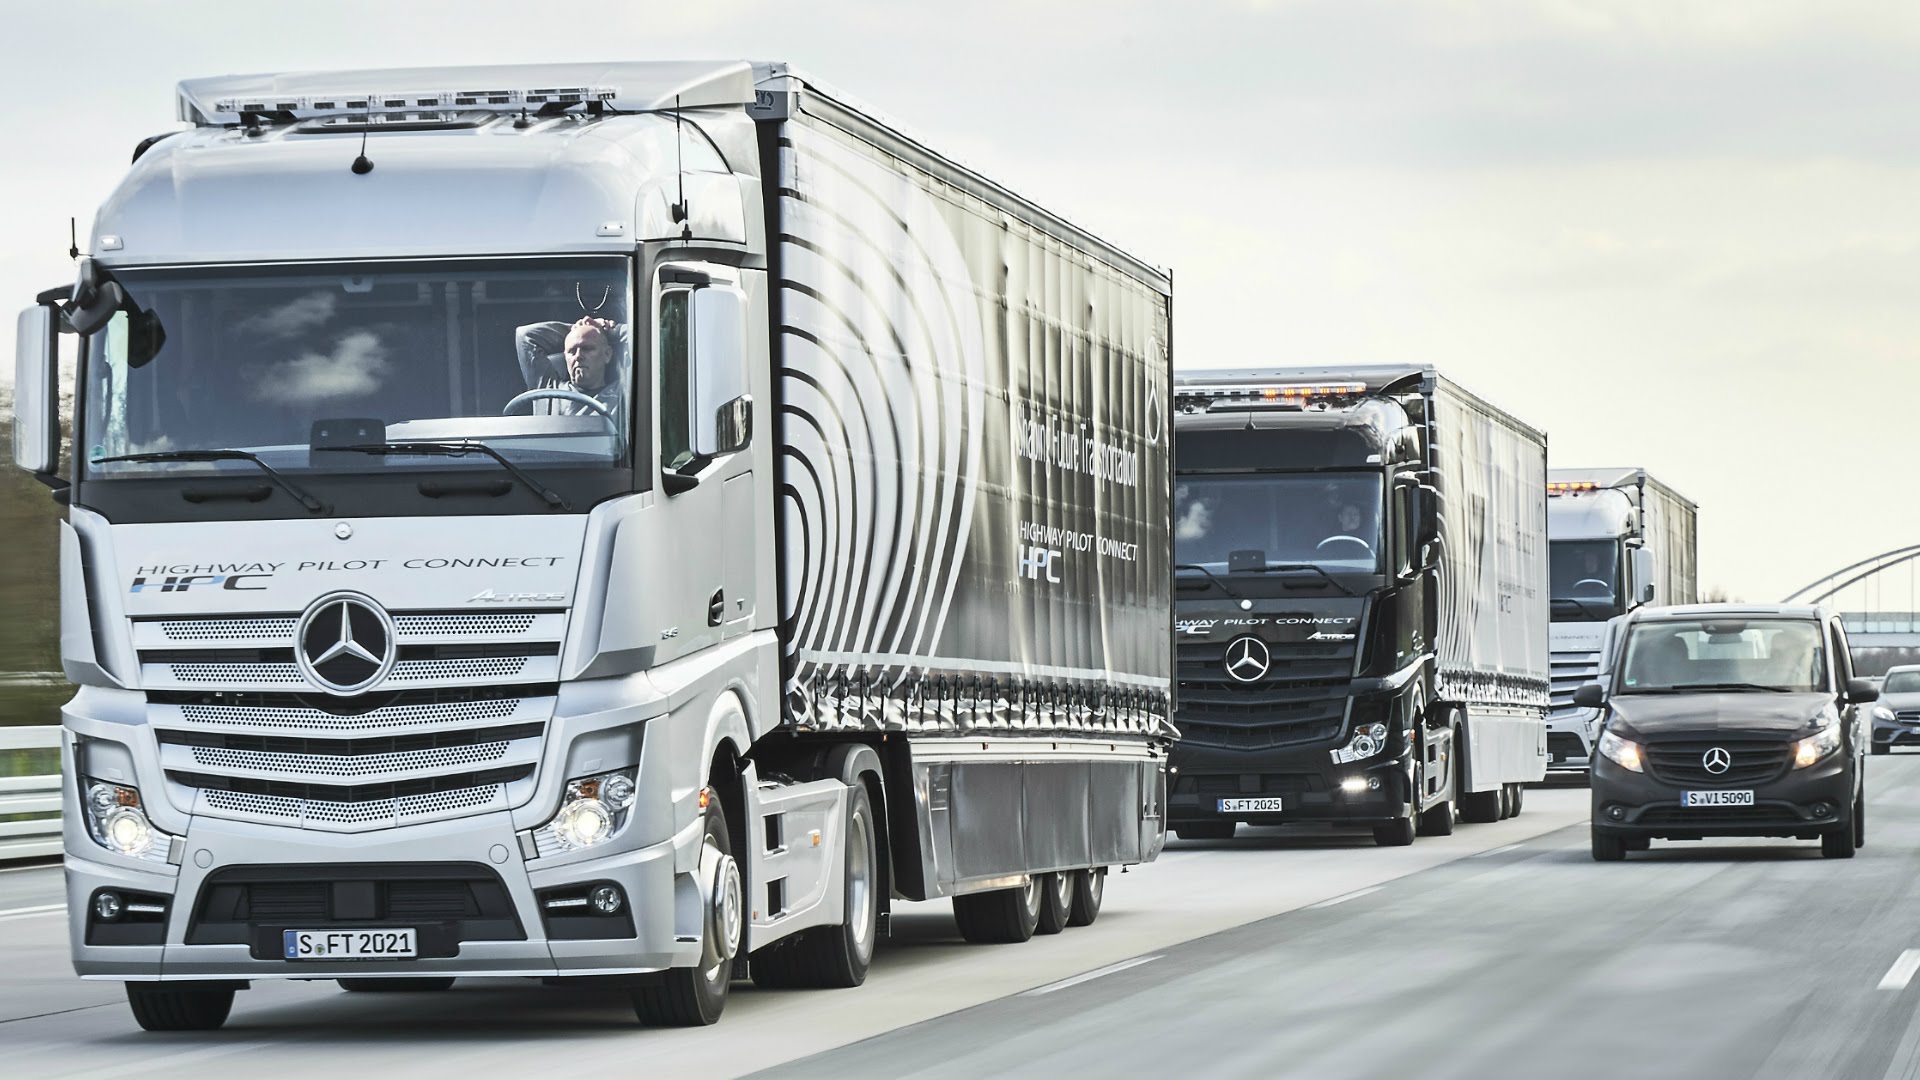 2017 Mercedes-Benz Trucks Highway Pilot Connect - YouTube